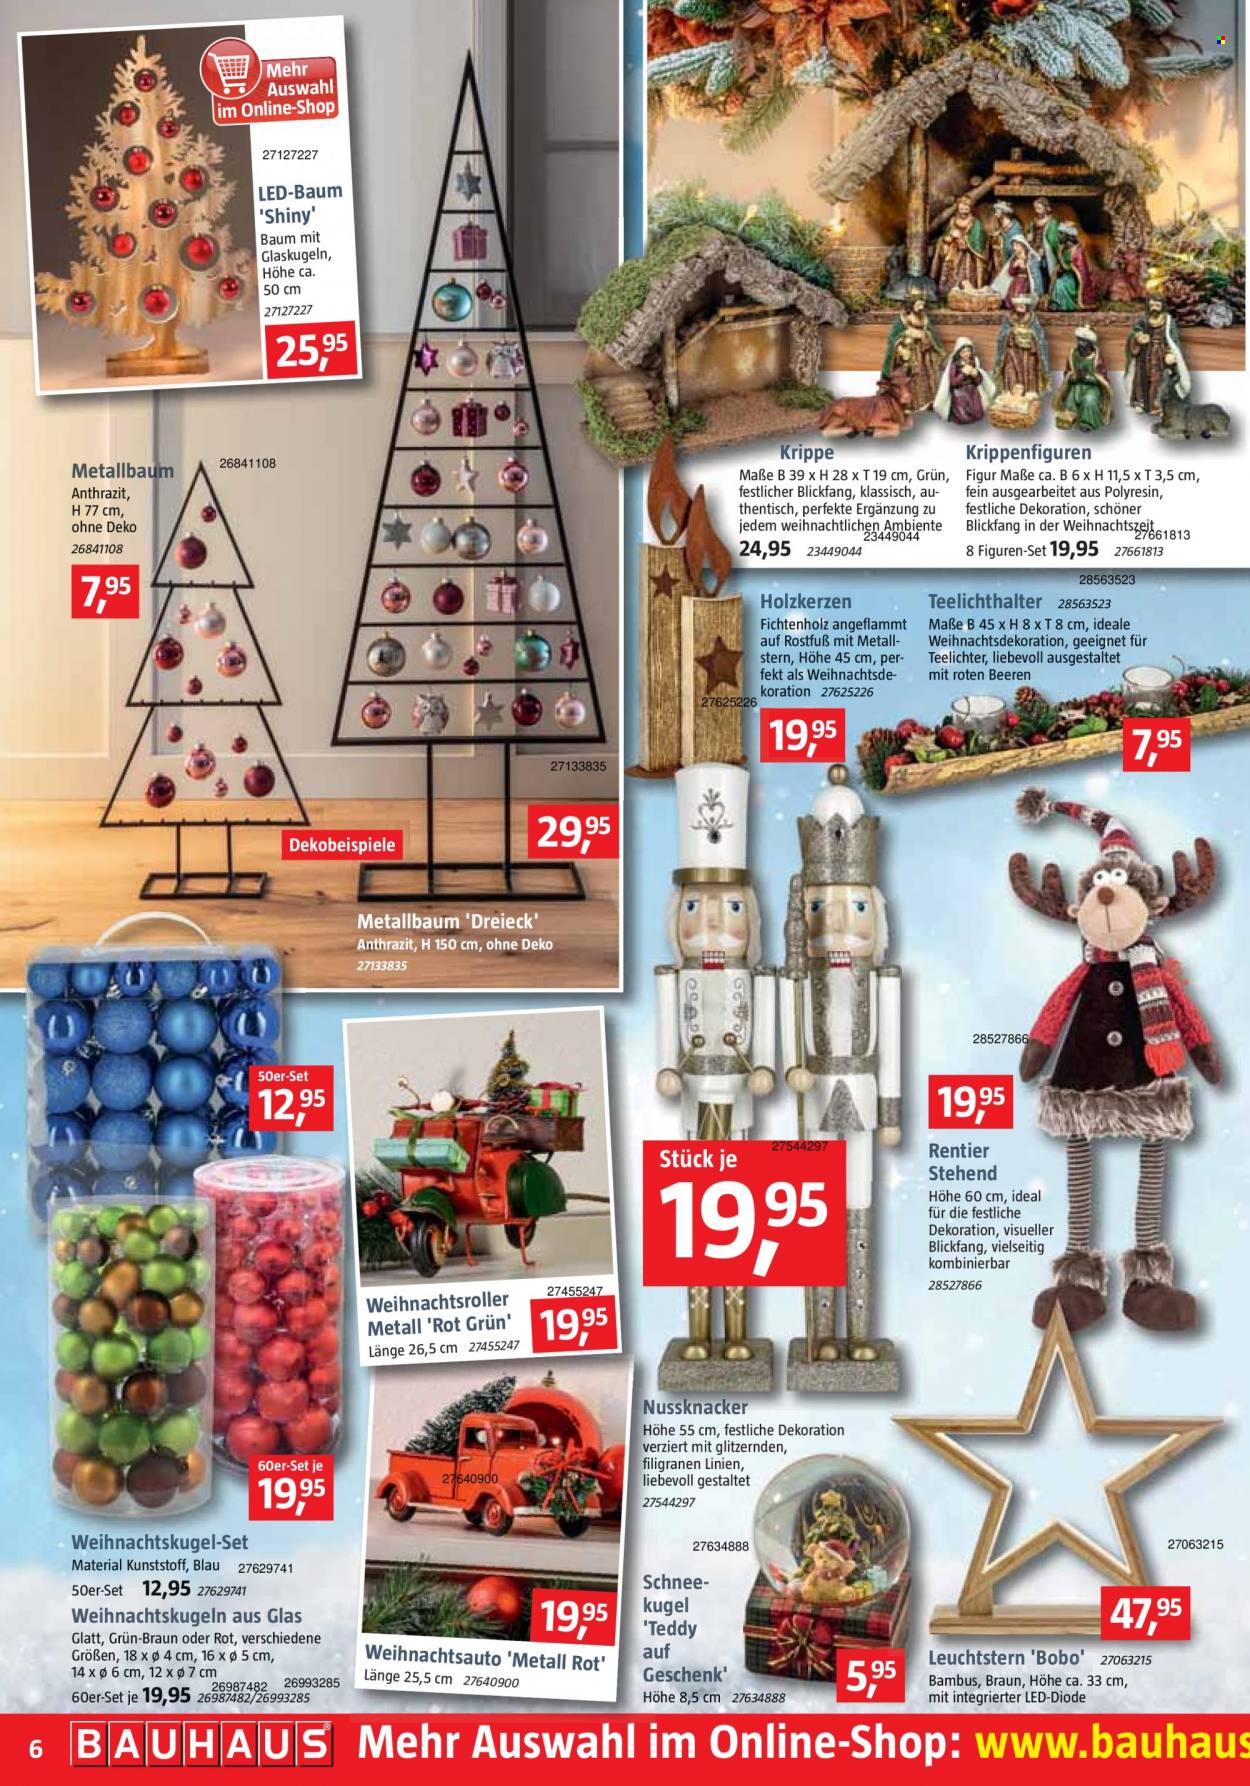 thumbnail - Prospekte Bauhaus - 27.11.2021 - 25.12.2021 - Produkte in Aktion - Nussknacker, Weihnachtskugeln, LED-Baum, Holz. Seite 6.